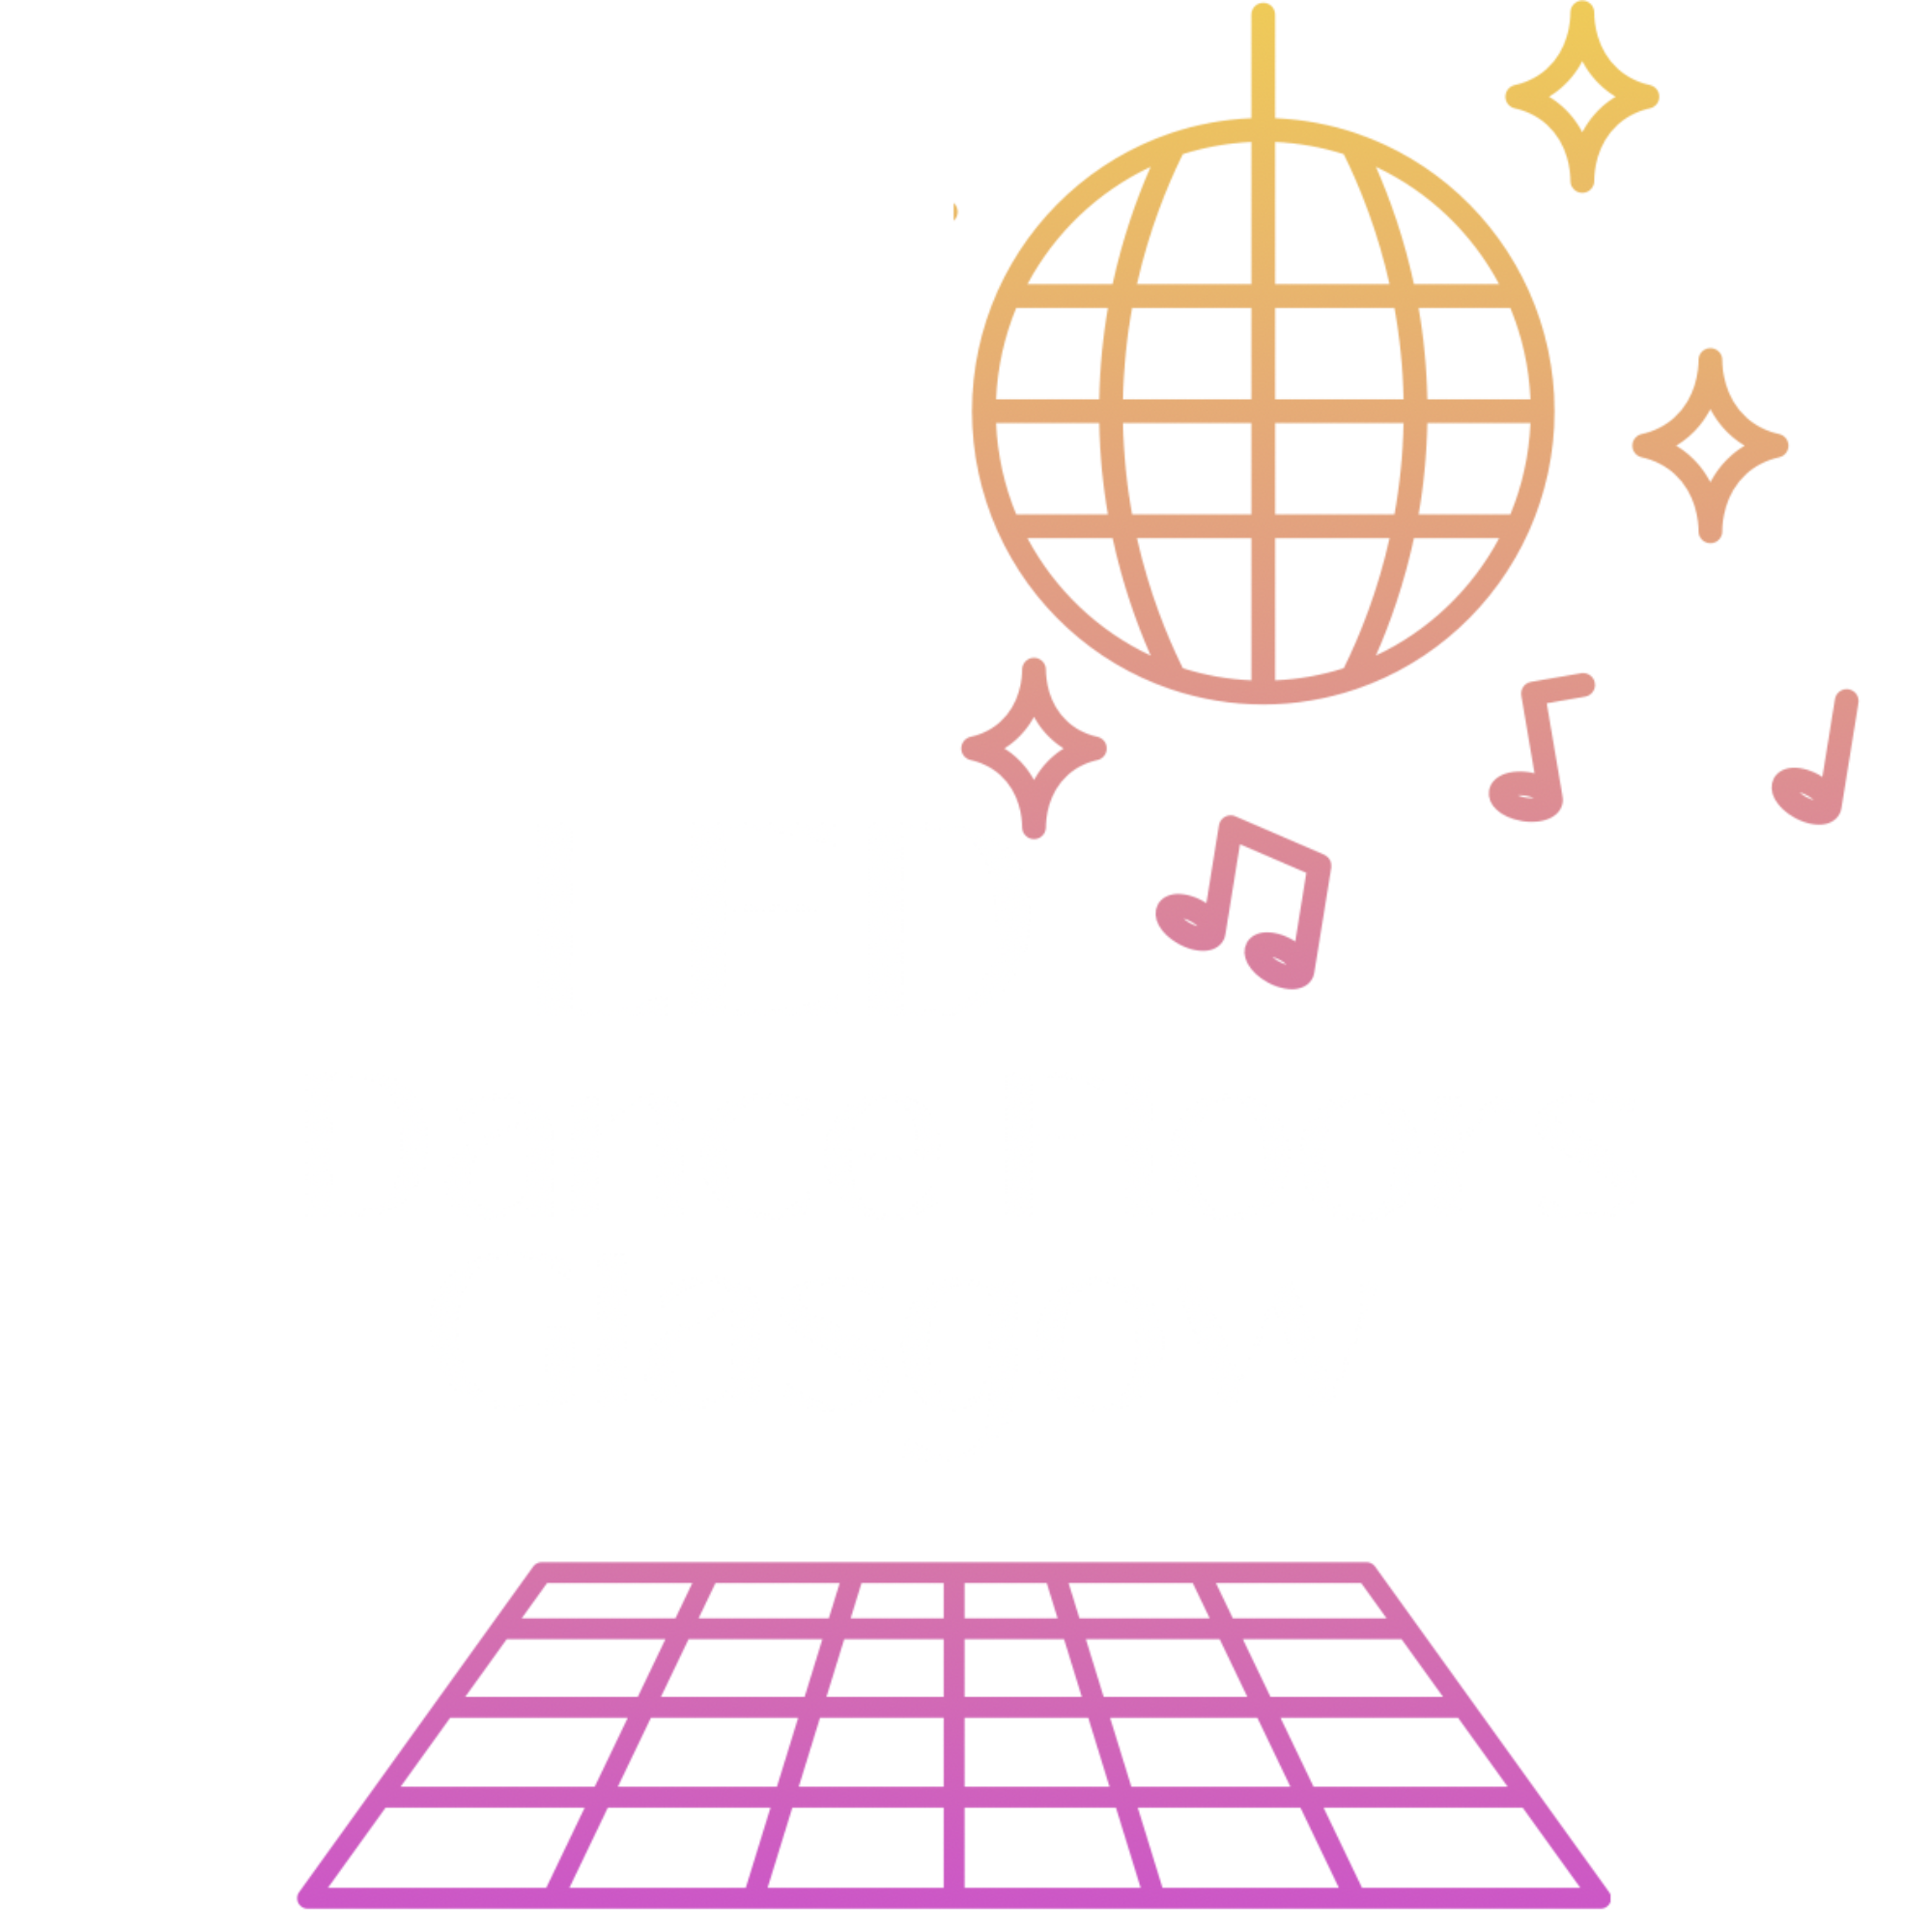 Led Dance Floors Glasgow